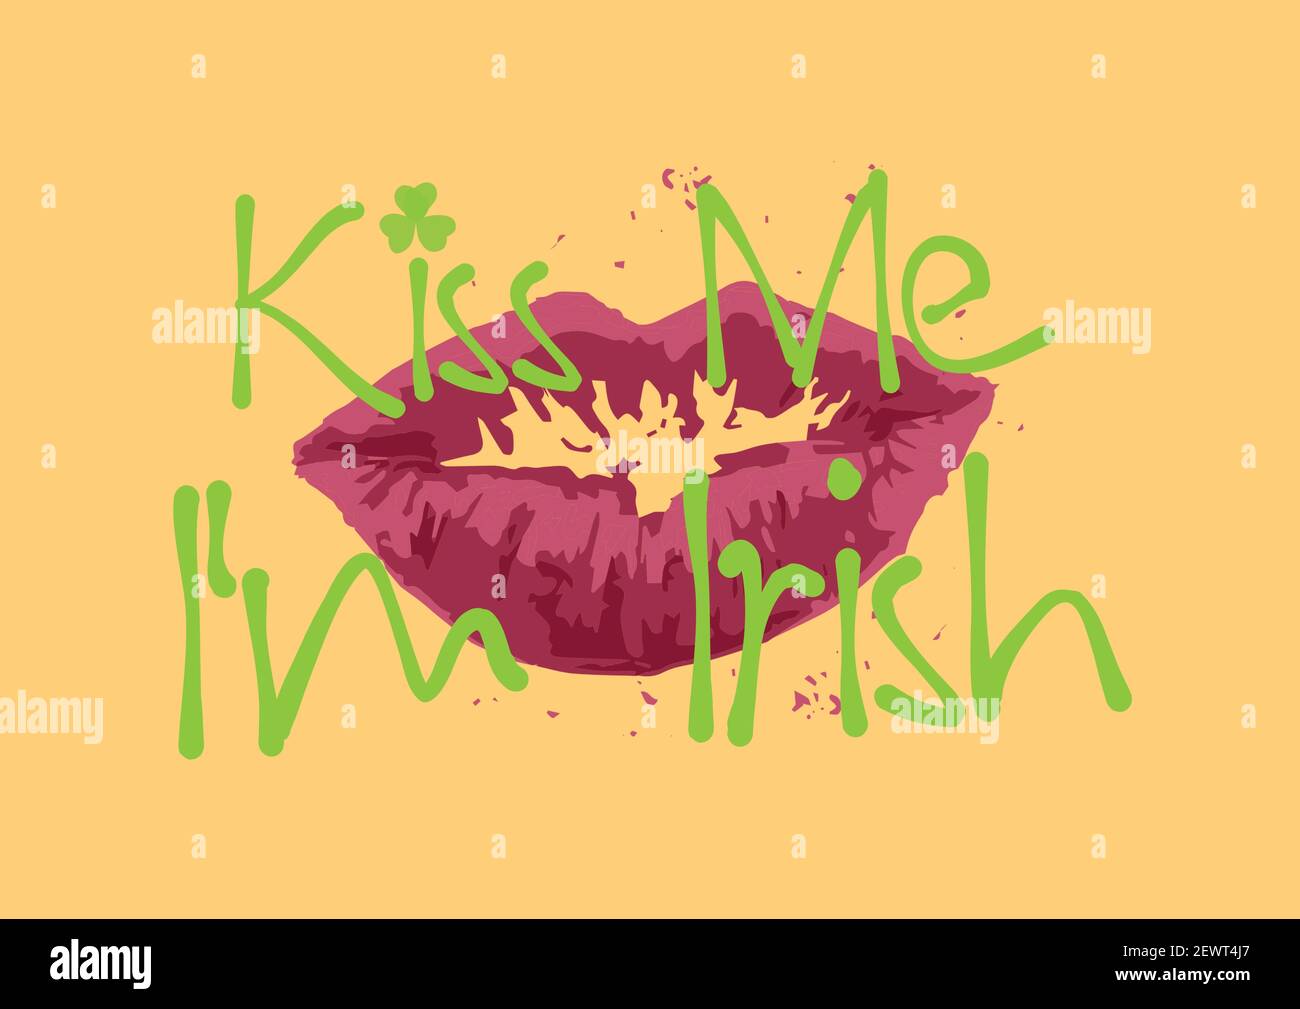 Kiss me i'm irish text with pink lips on orange background Stock Photo